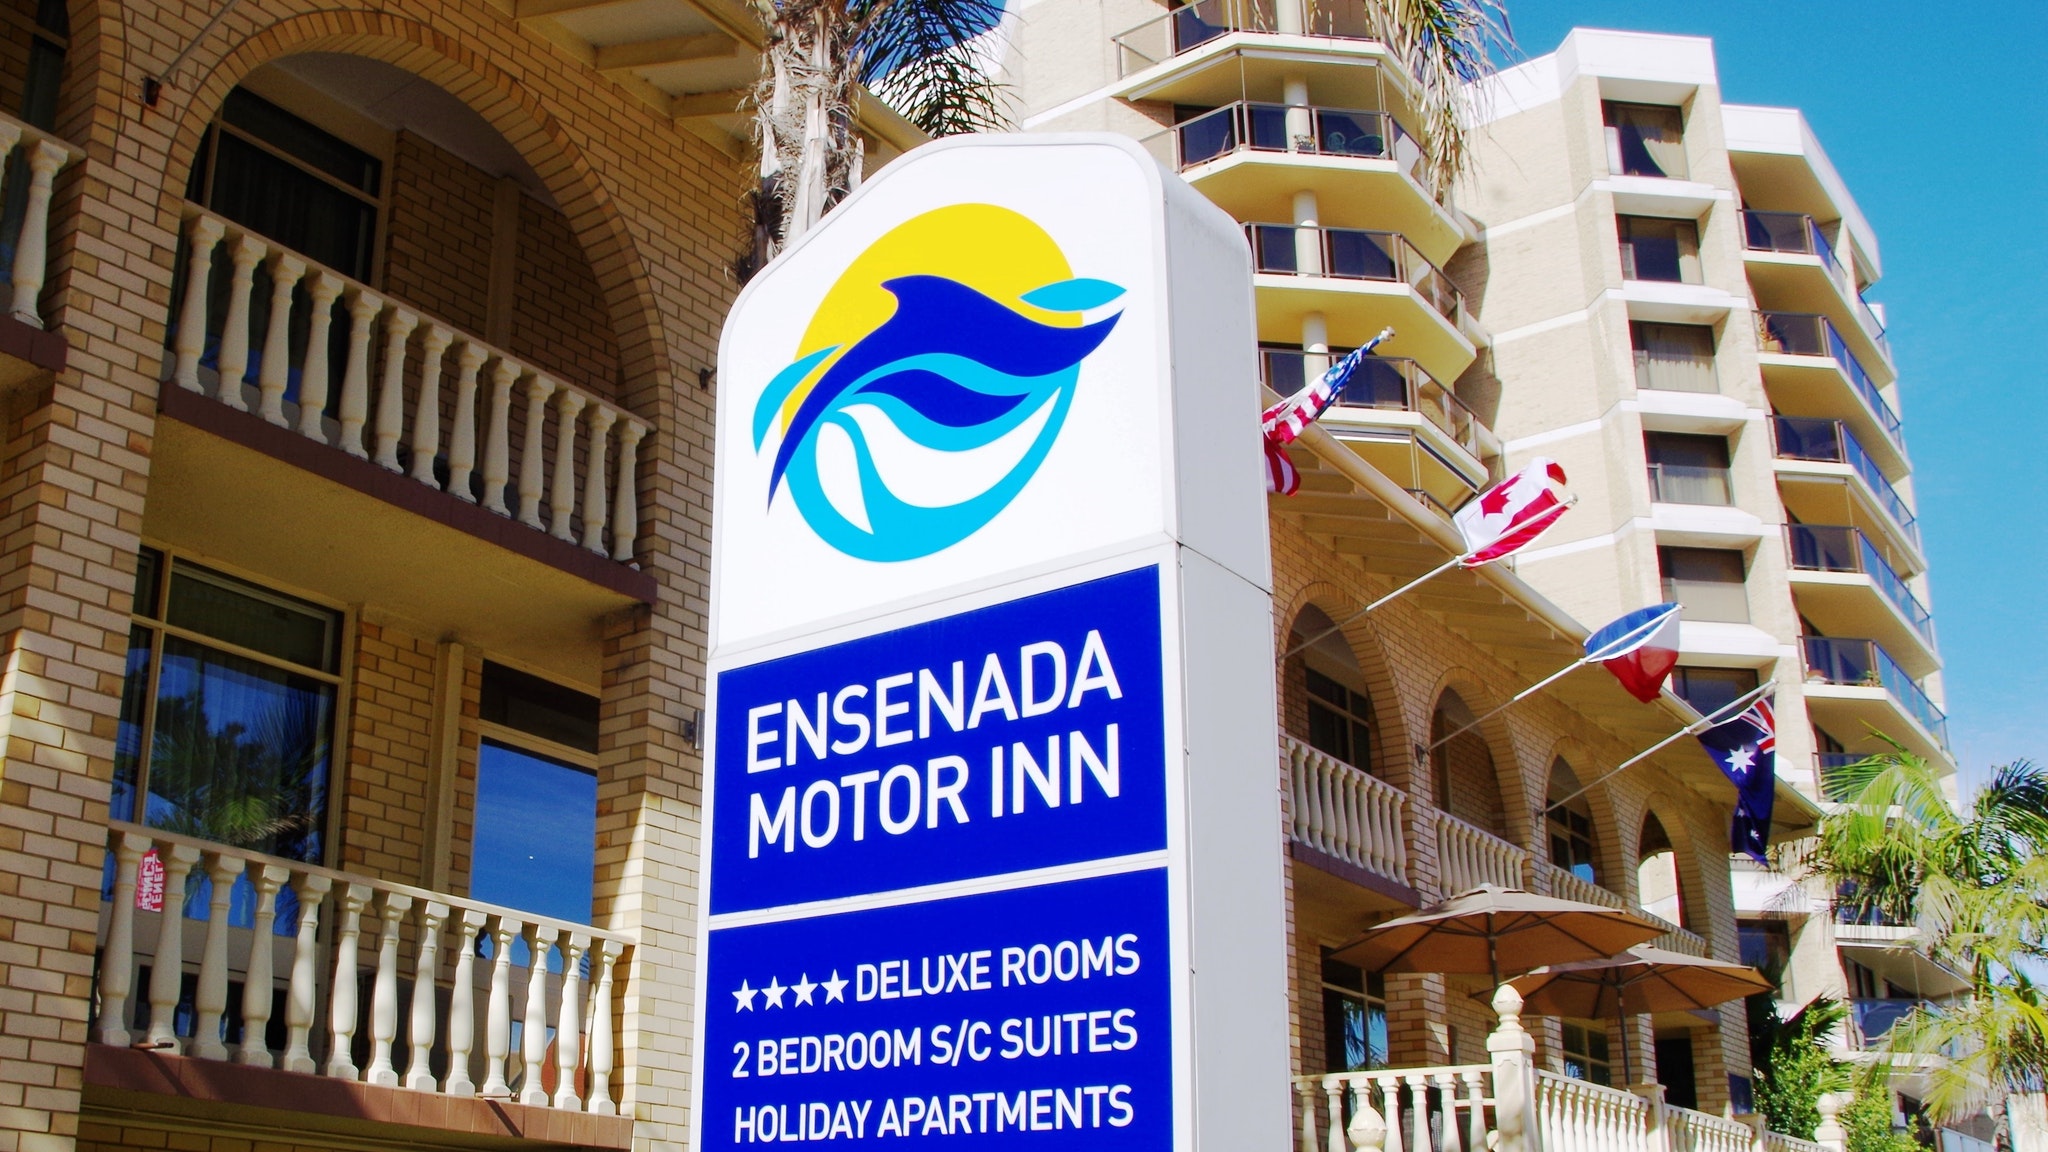 Ensenada Motor Inn And Suites - Accommodation Melbourne 10